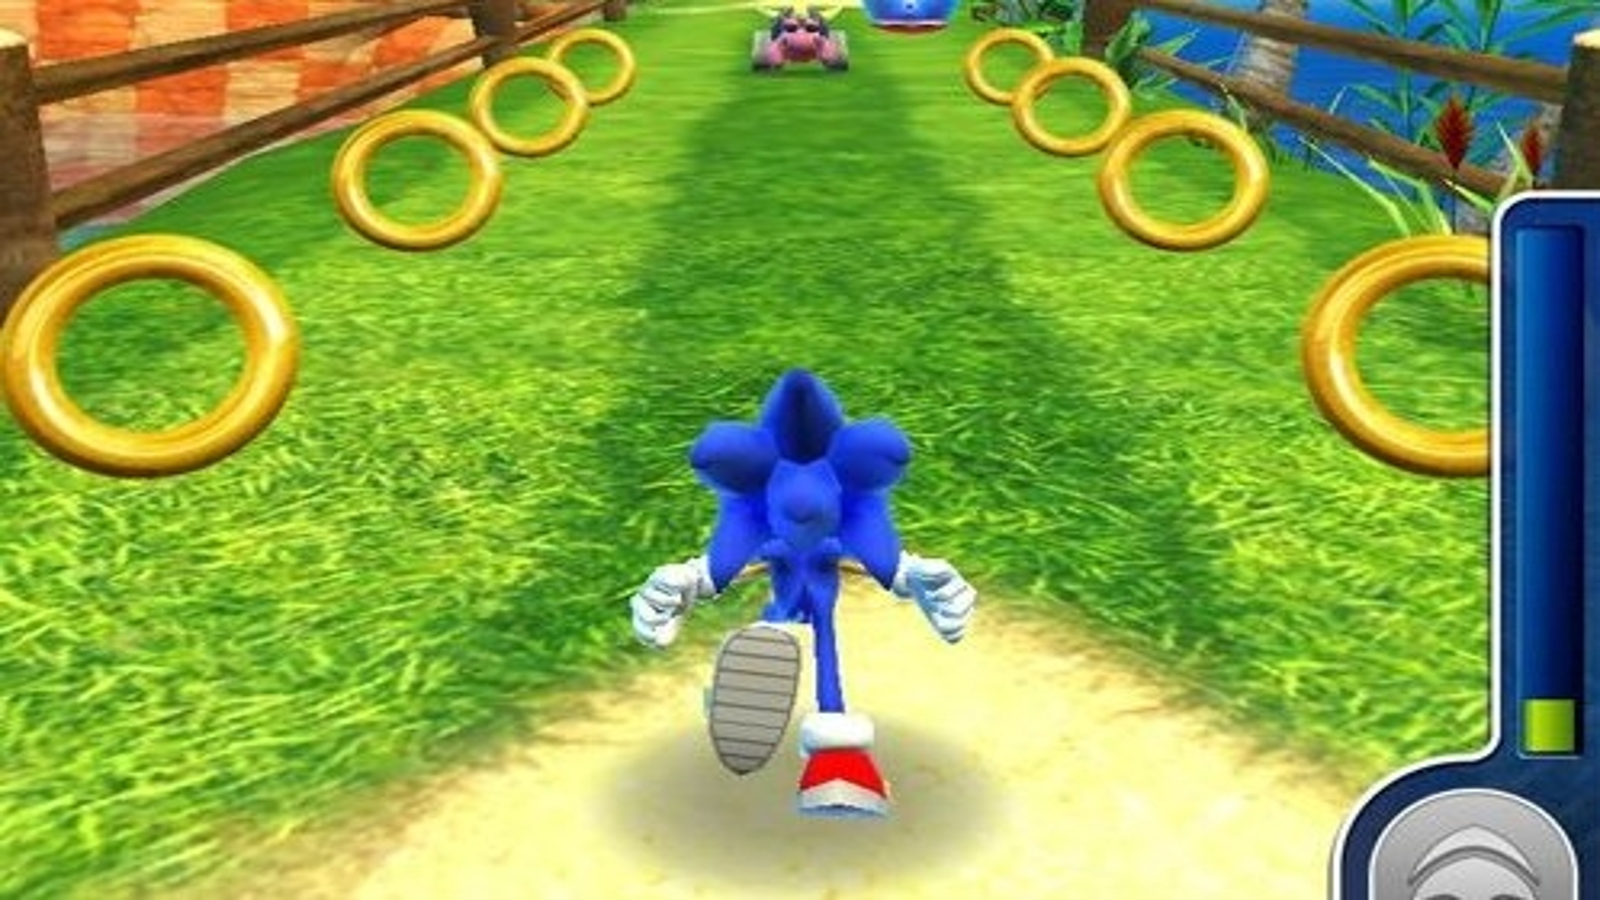 Download & Play Sonic Dash on PC & Mac (Emulator)